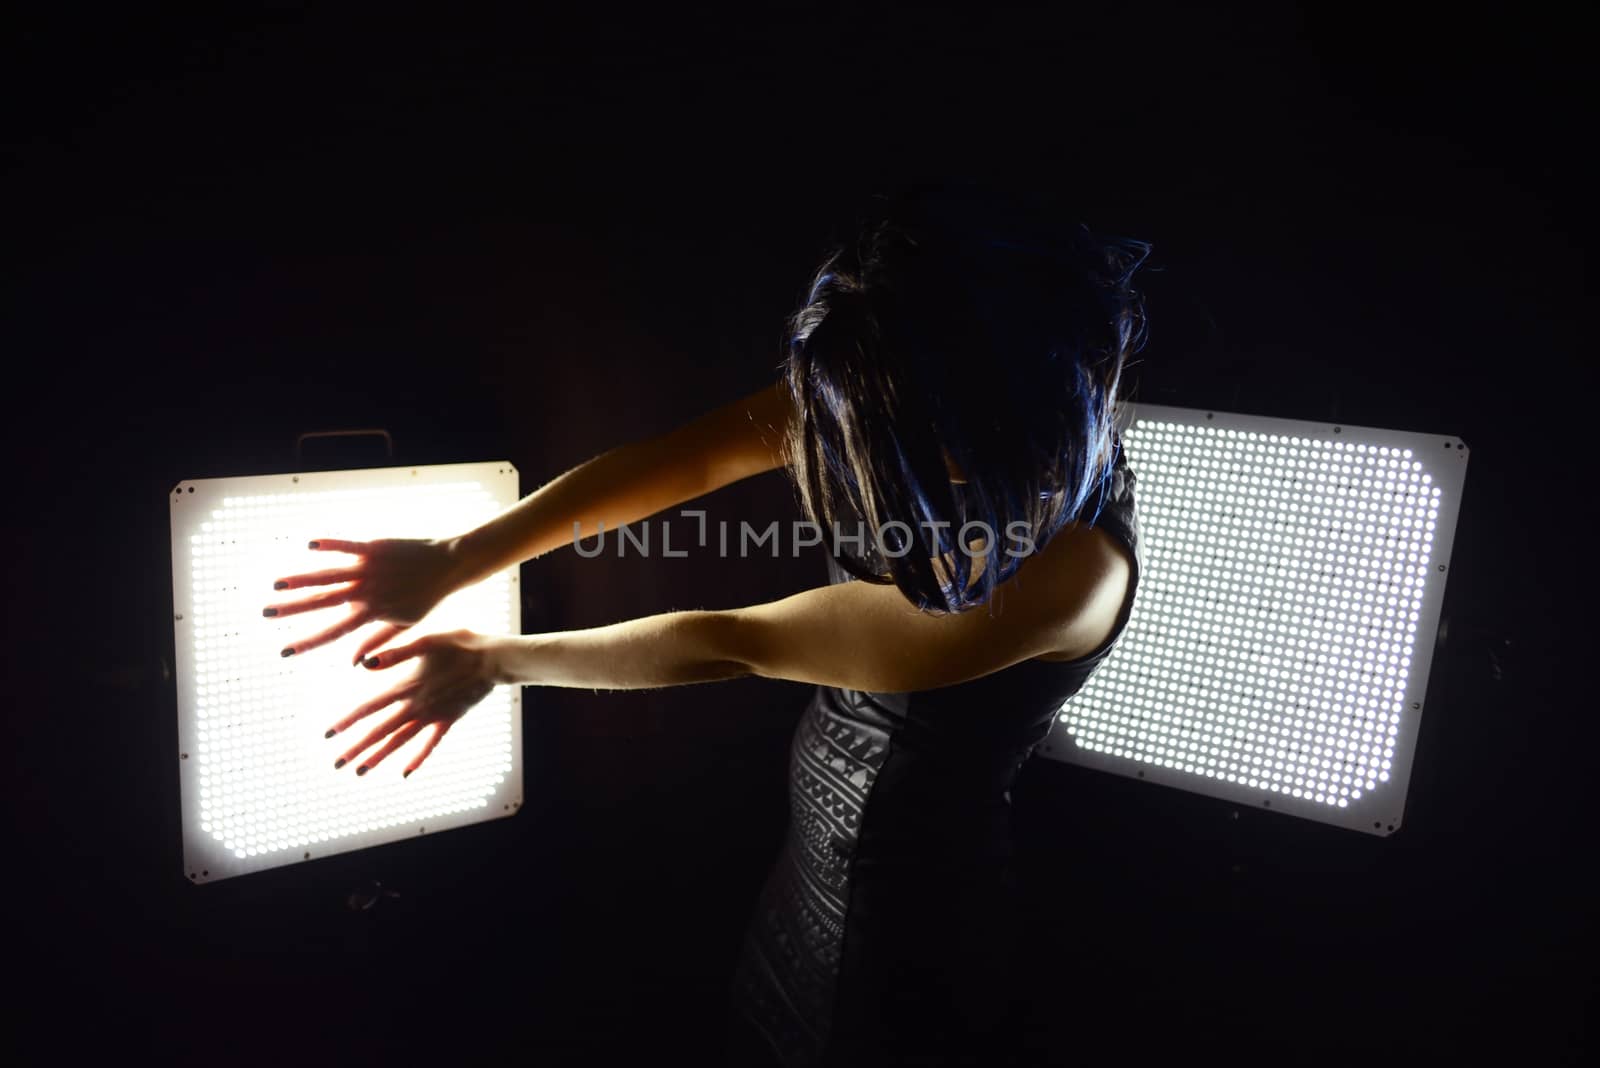 Cyberpunk woman silhouette by dk_photos